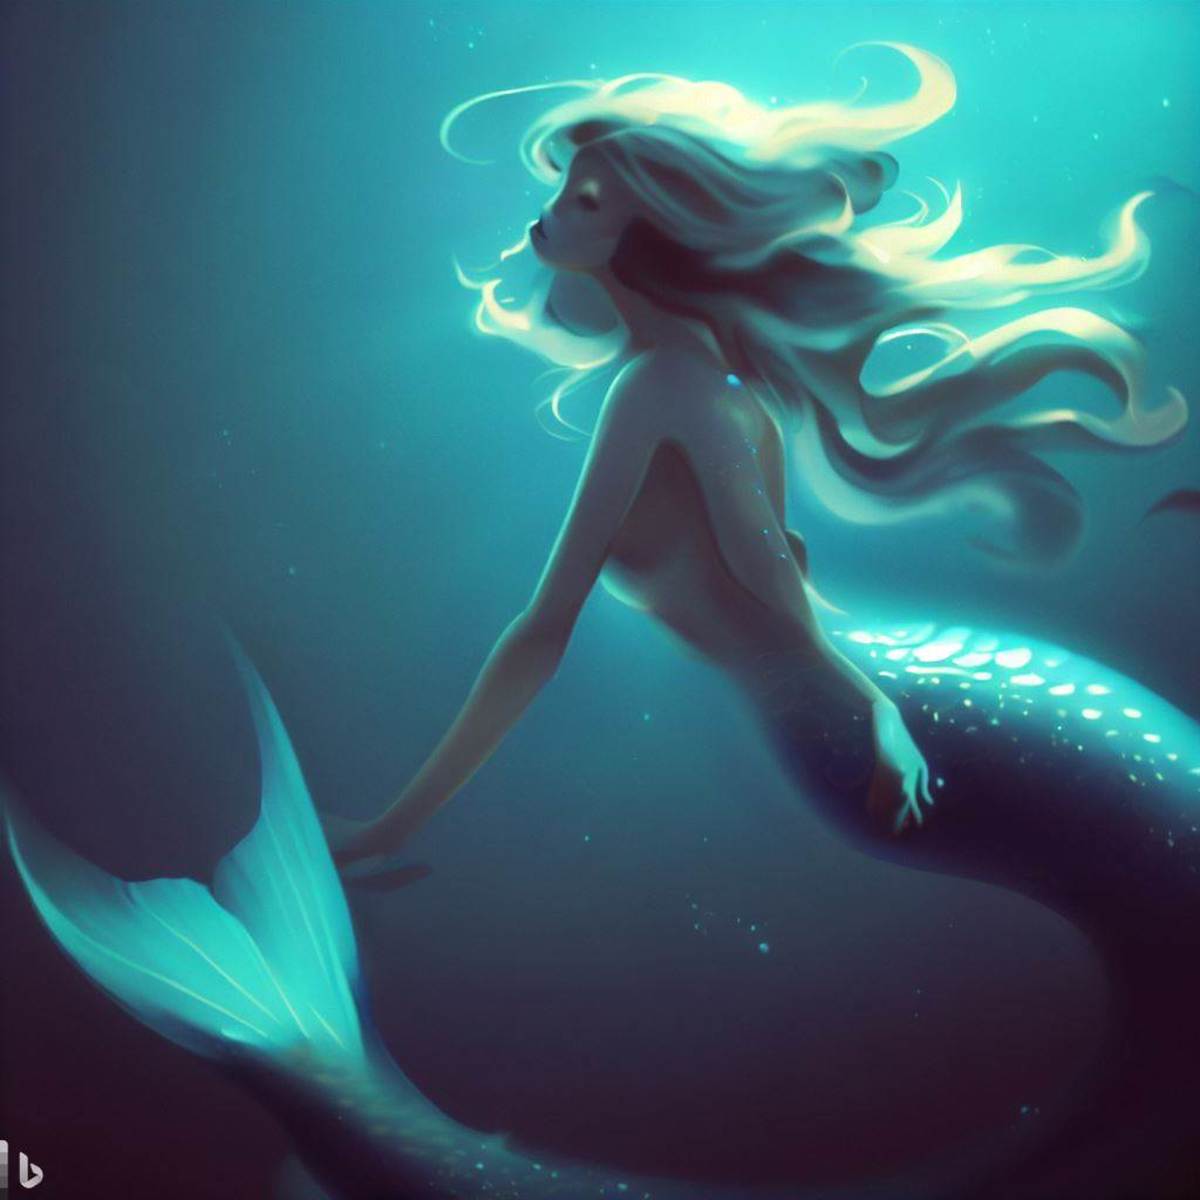 Mermaids Real Or Myth Hubpages